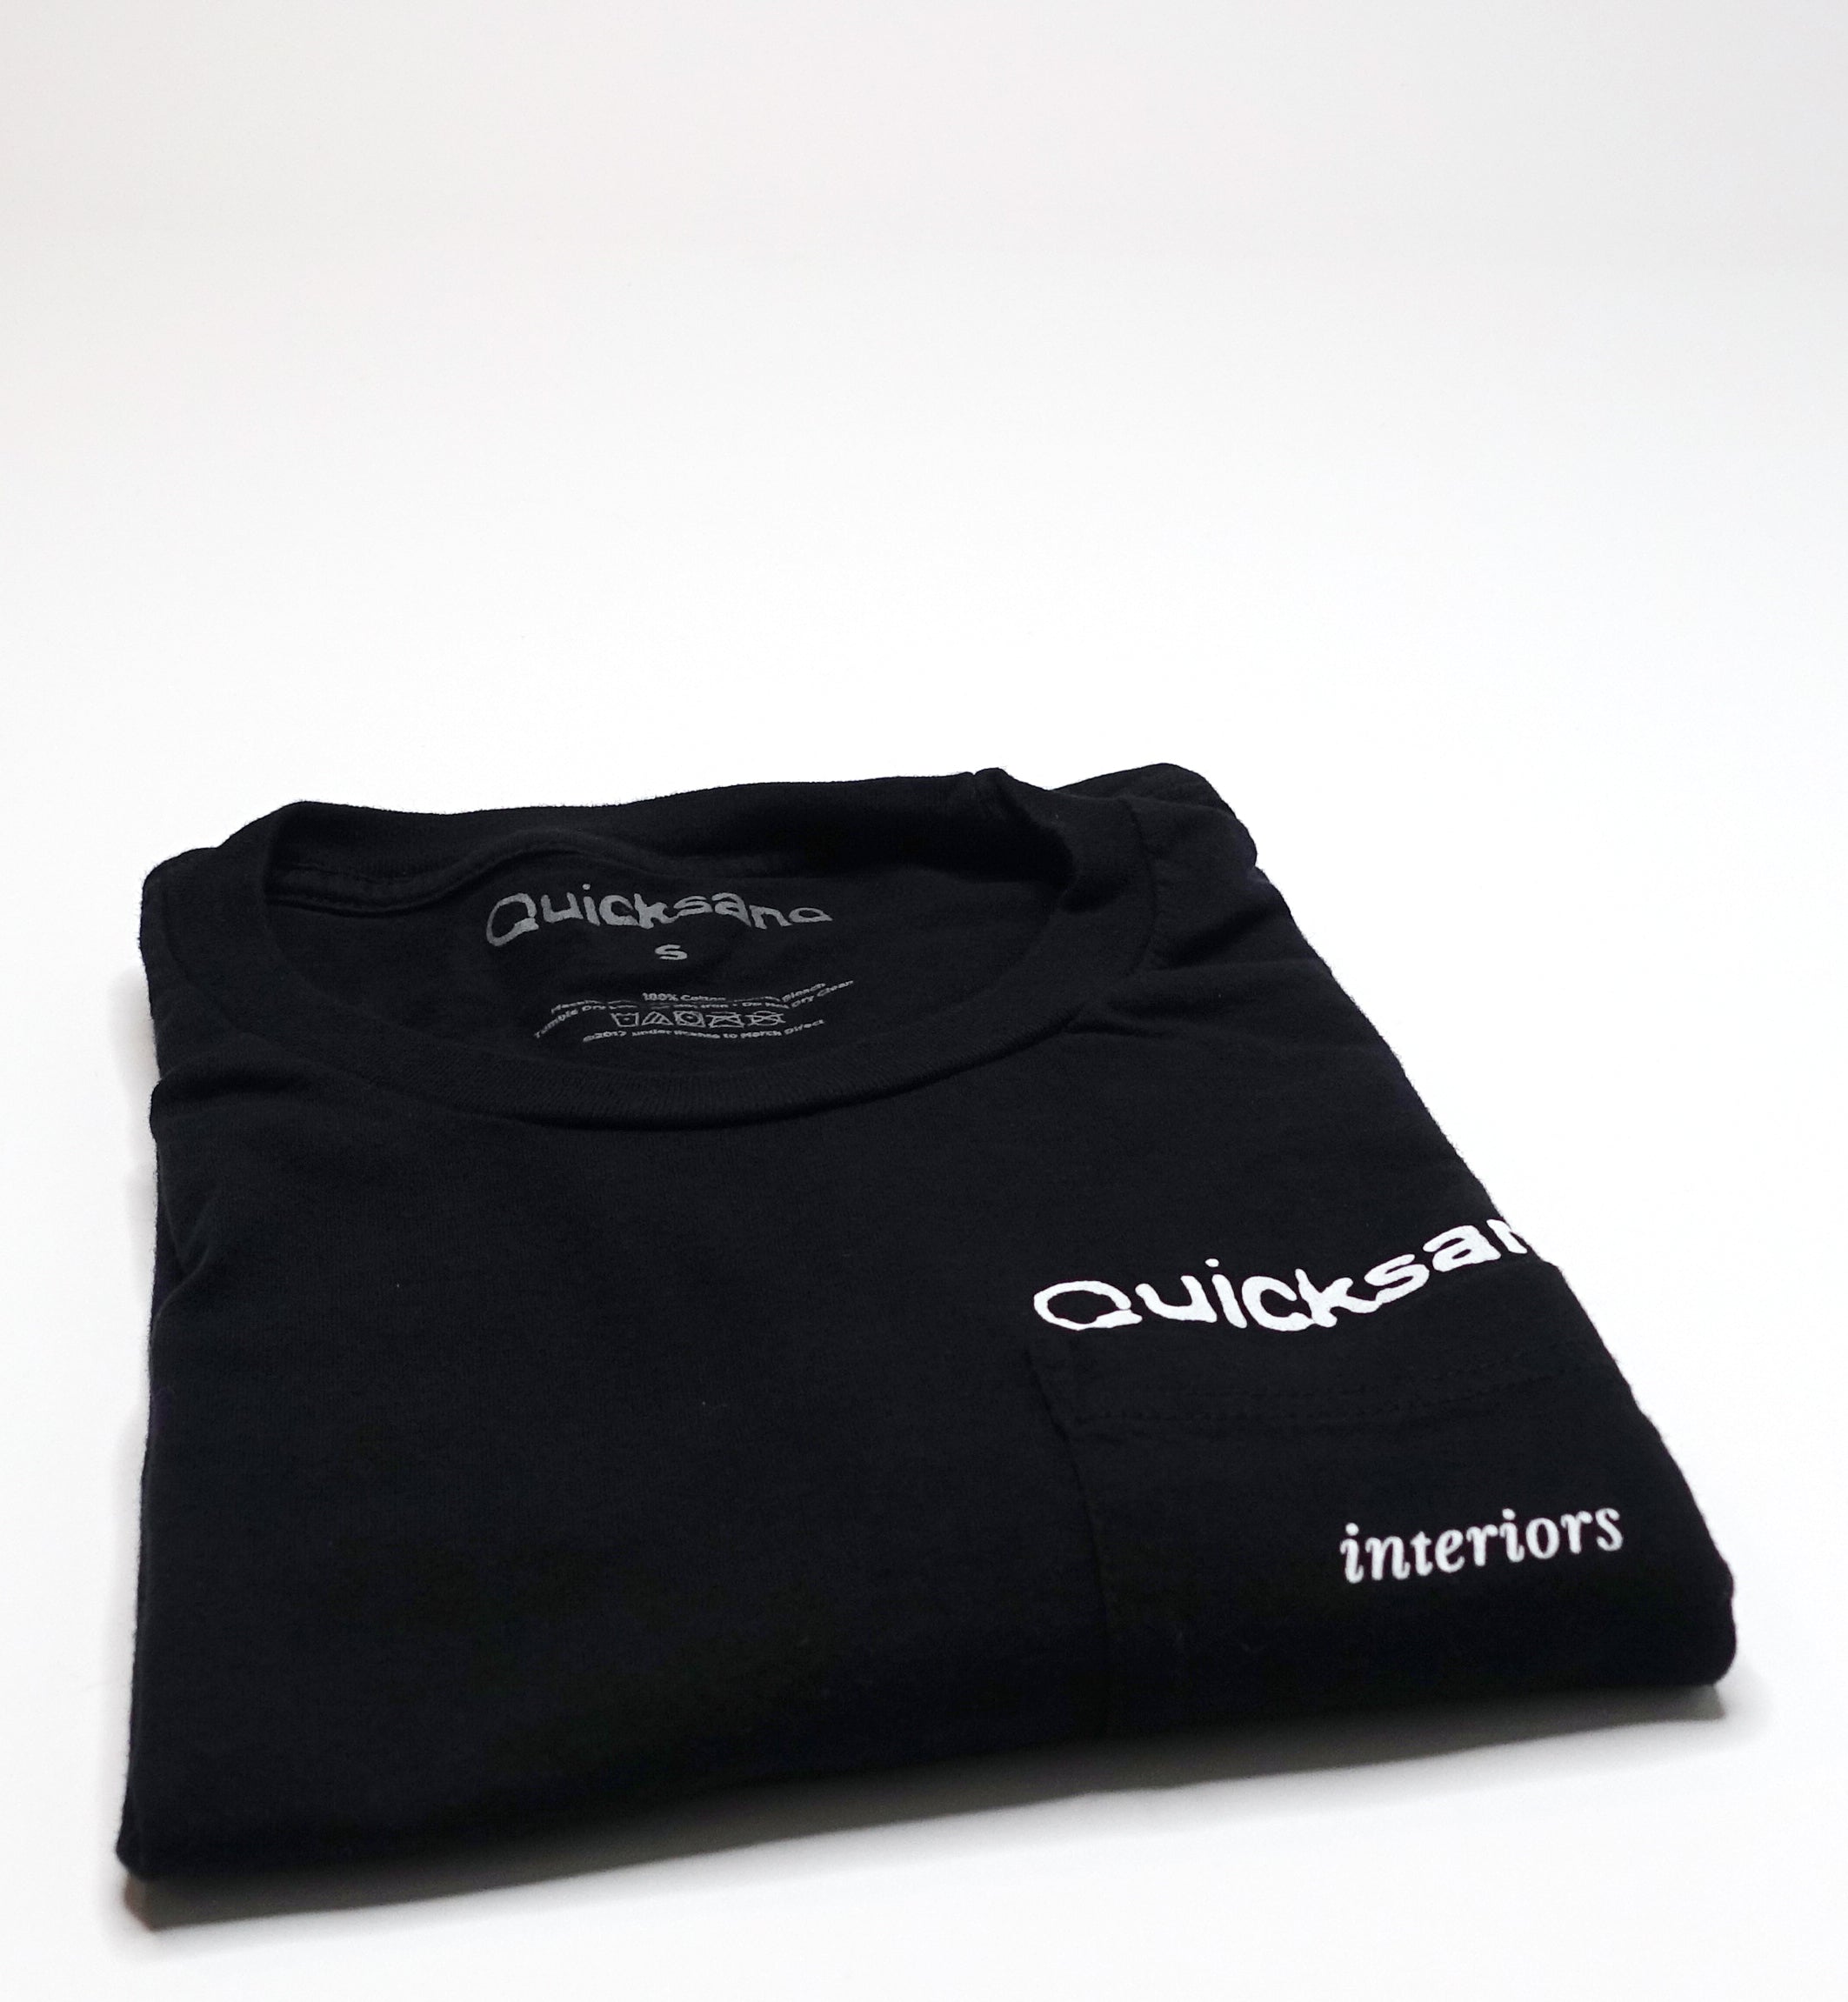 Quicksand ‎– Interiors Pocket 2017 Tour Shirt Size Small